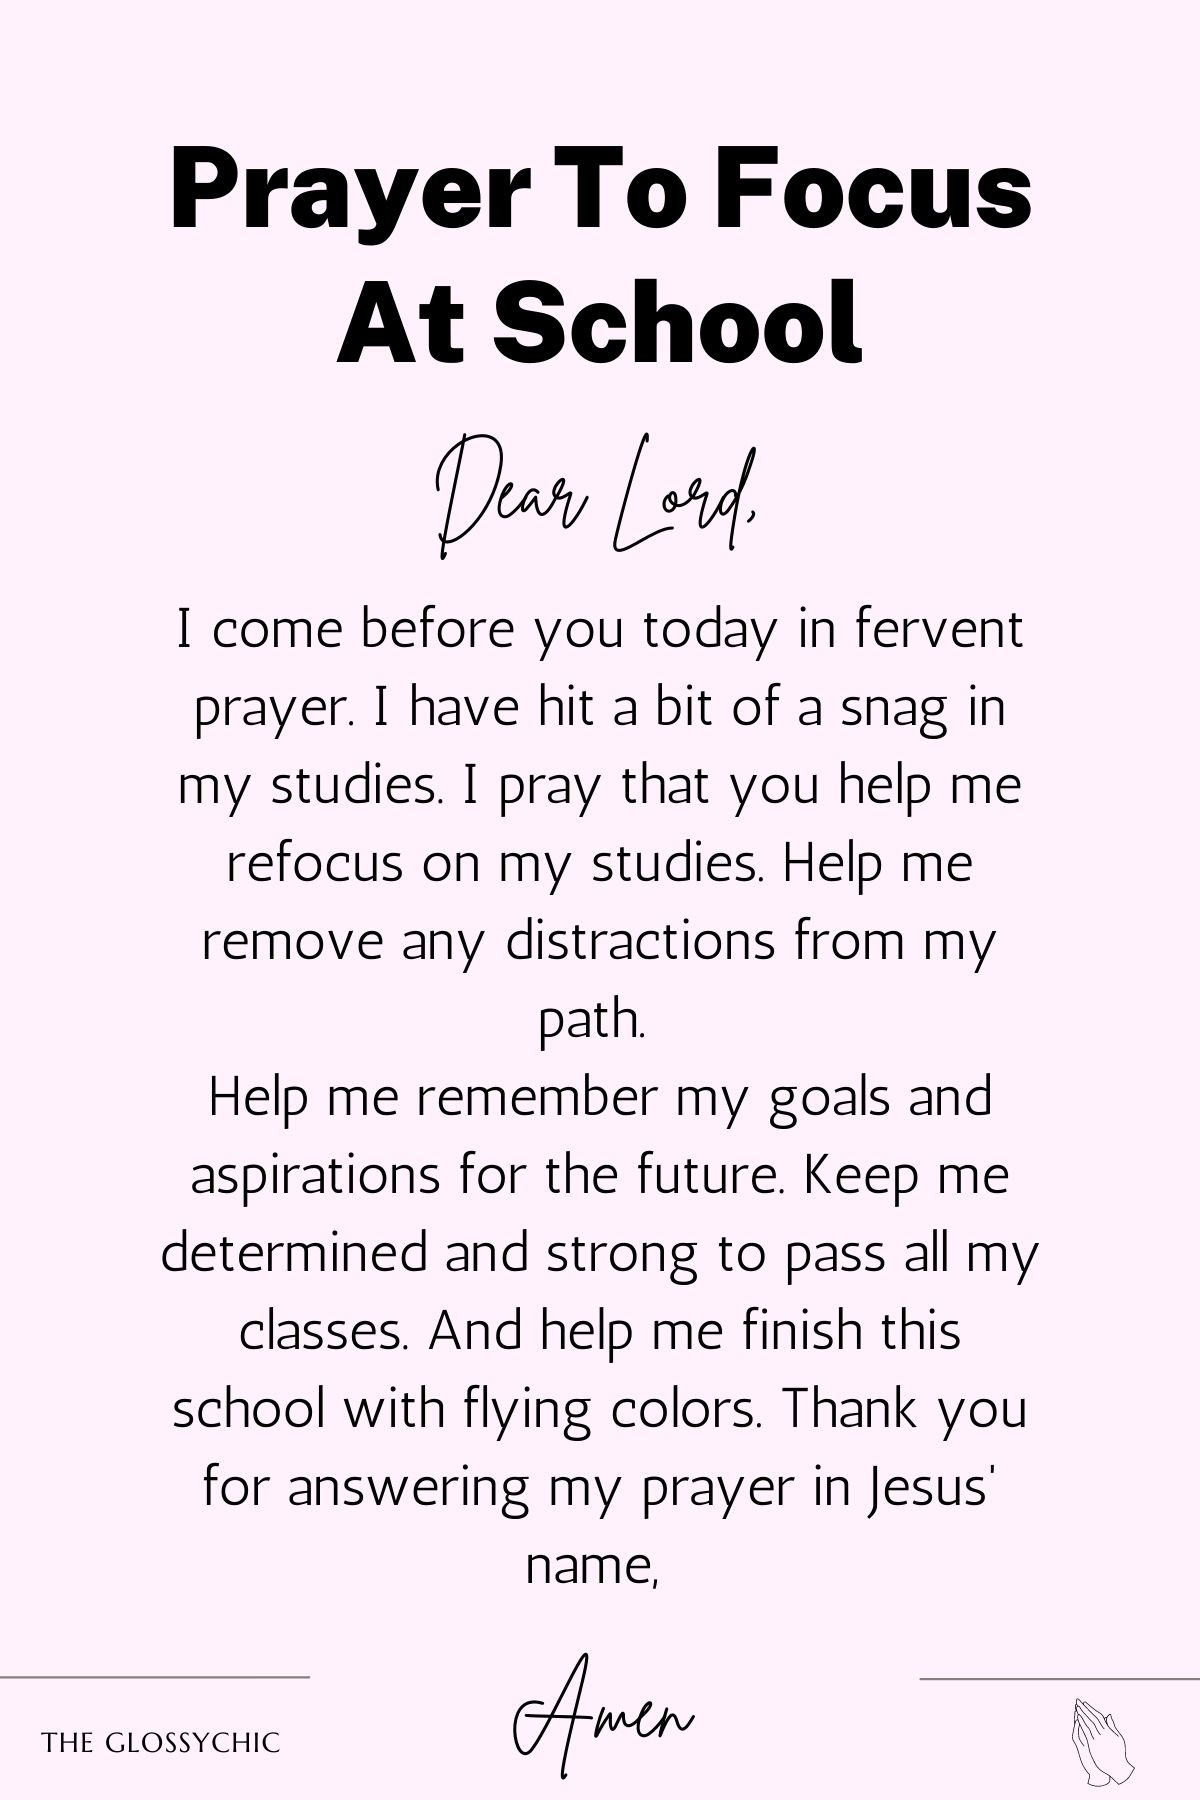 Prayer to focus at school